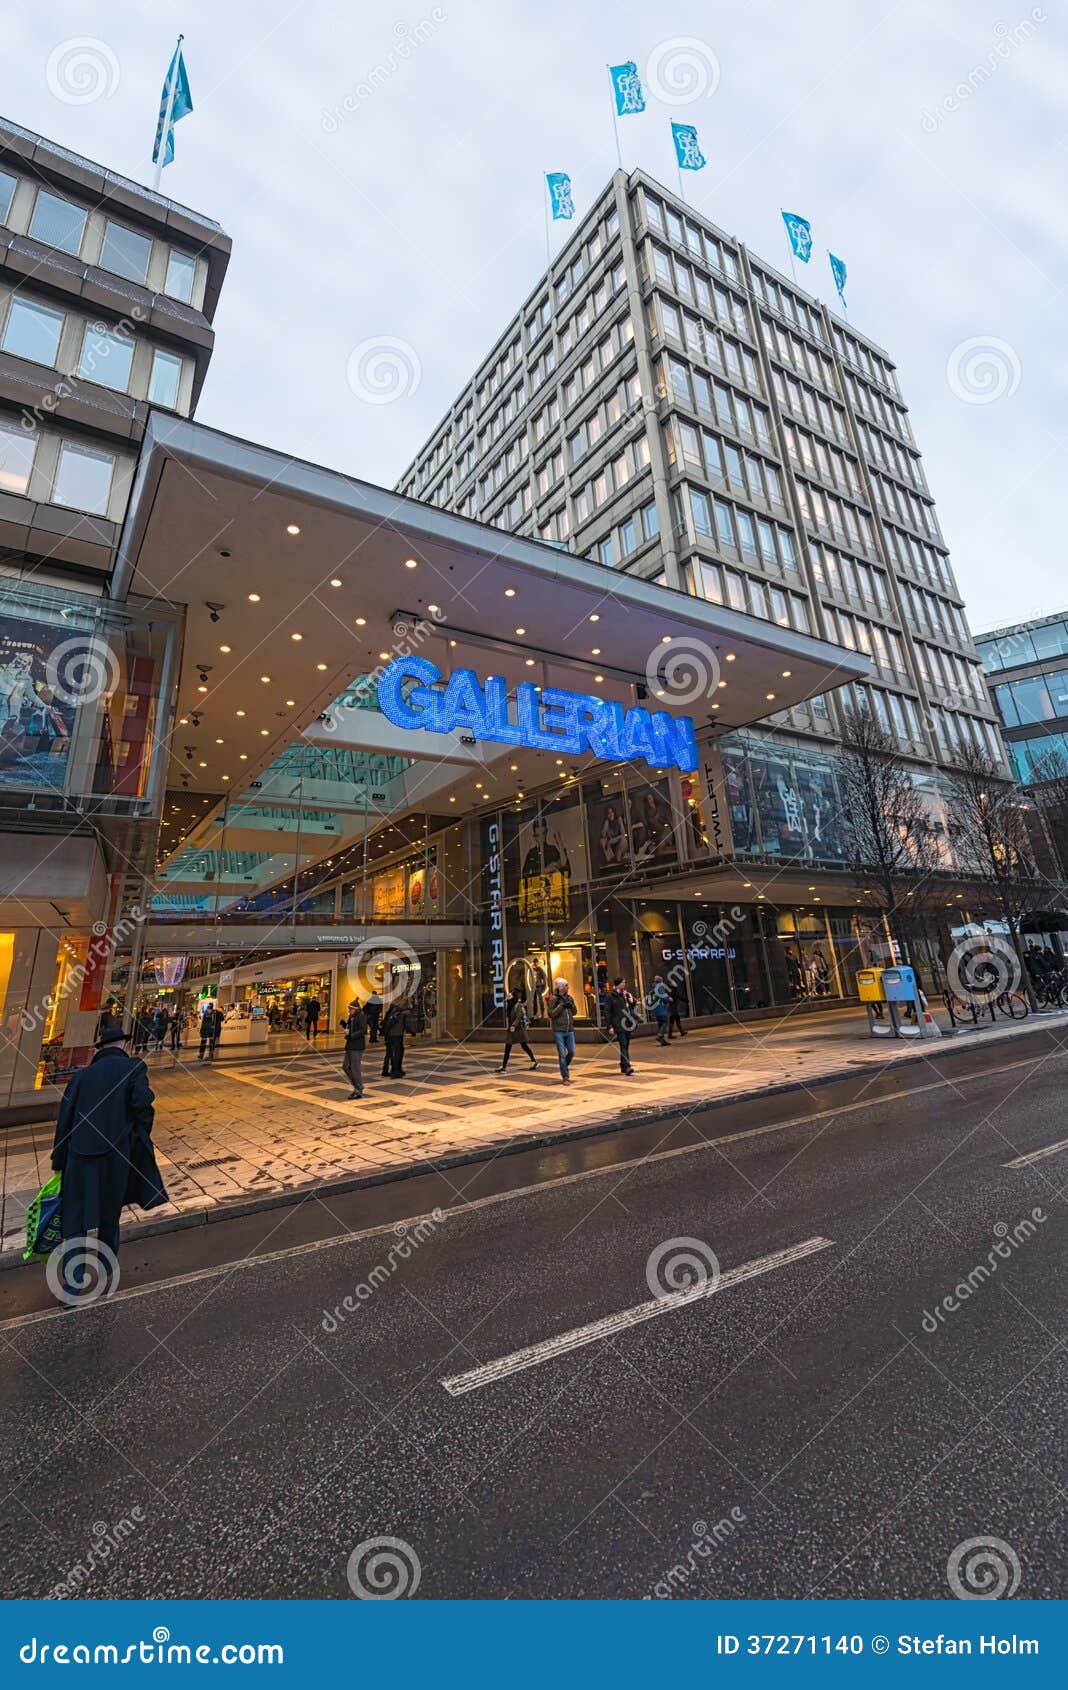 G-Star RAW – Galleria Mall